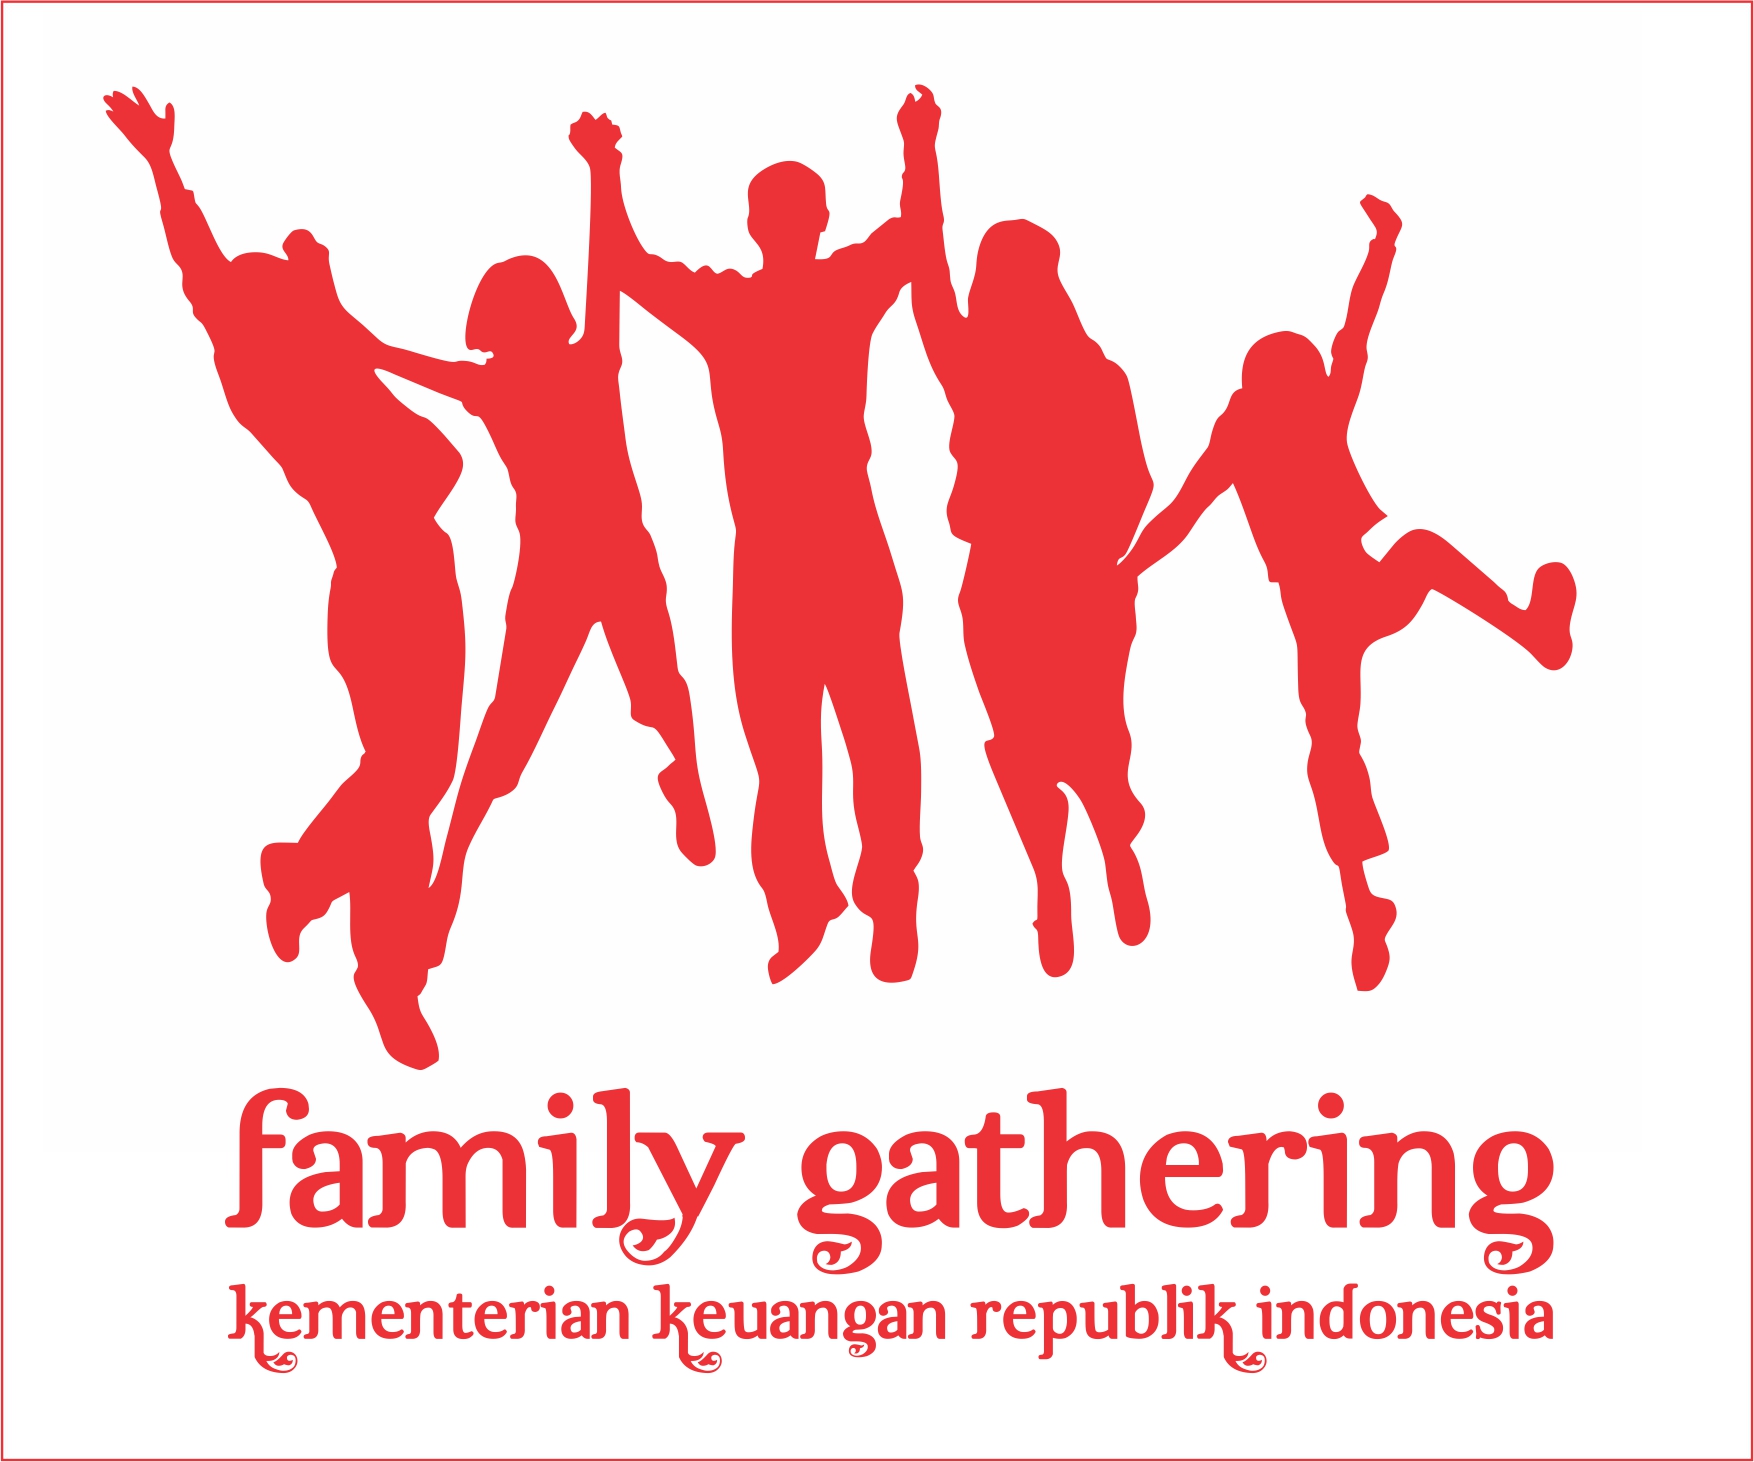 Family gathering epikd 2013 (LOGO)  antok center